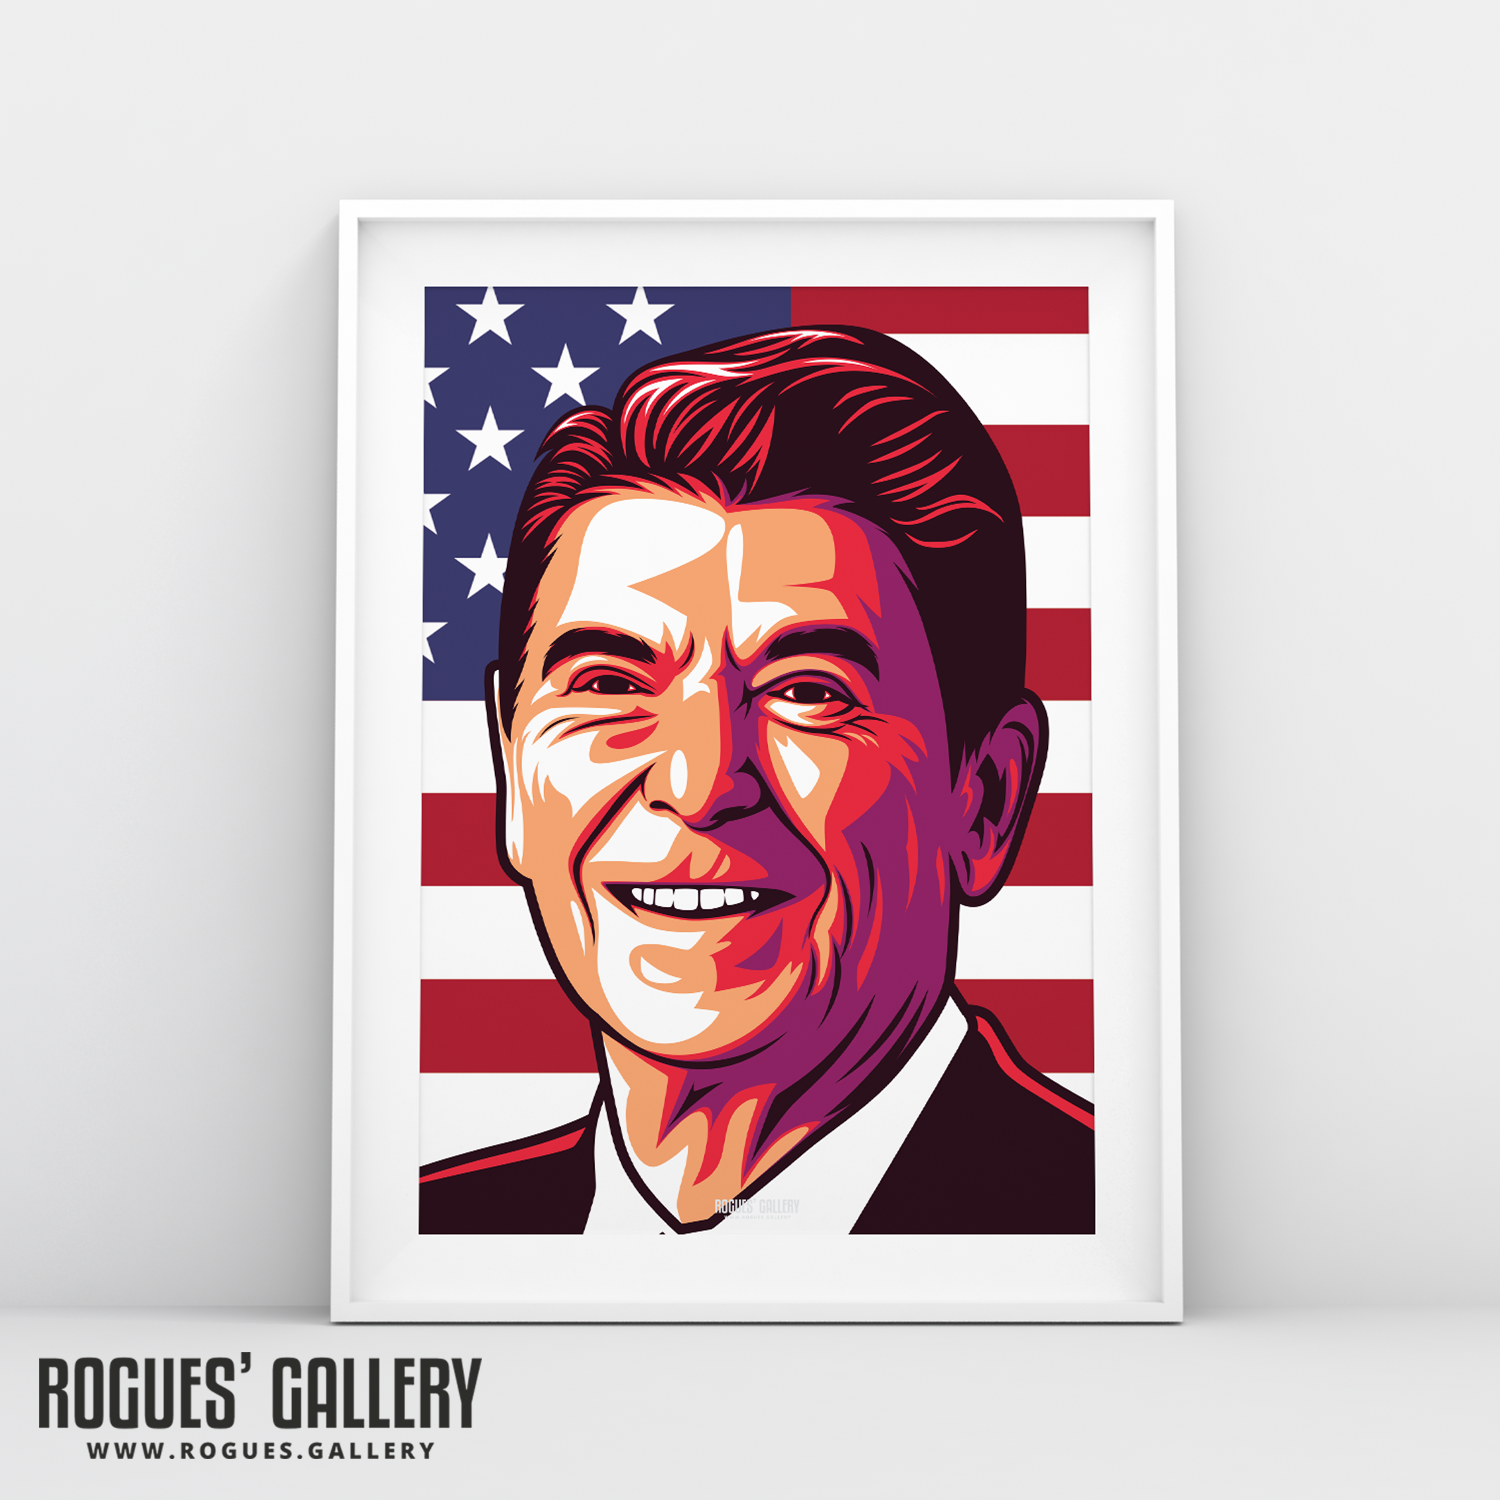 Ronald Reagan POTUS USA President A3 edits art print